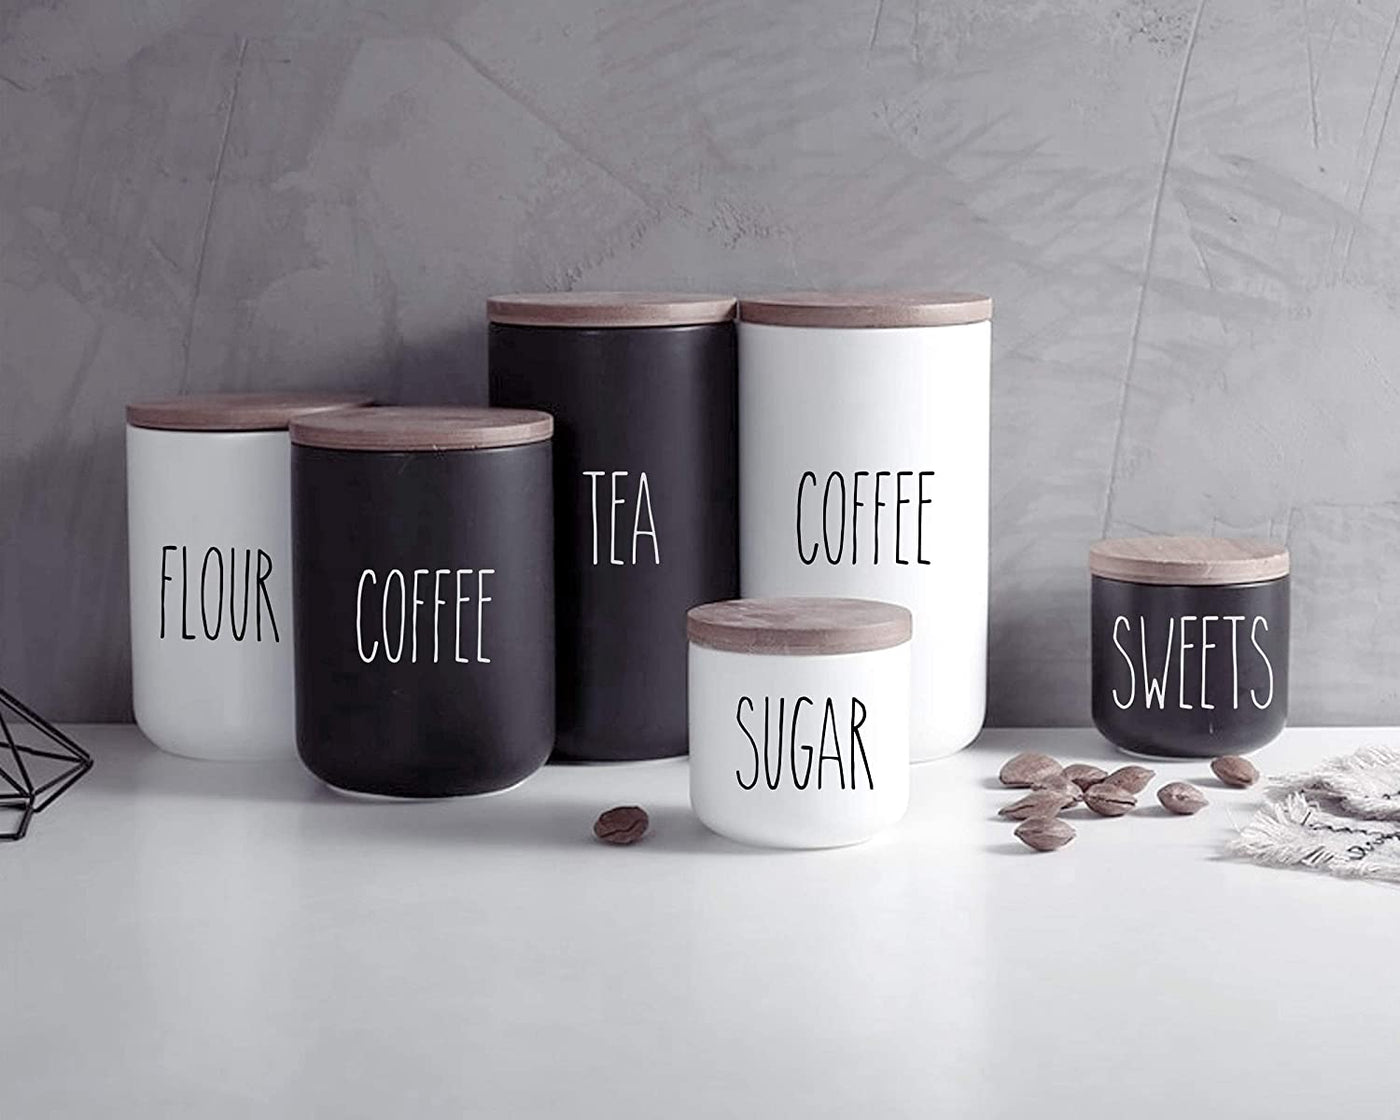 Coffee Sugar Flour Tea Kitchen Storage Labels For Ceramic / Glassware Jars Farmhouse Home Decor Vinyl Decal Stickers